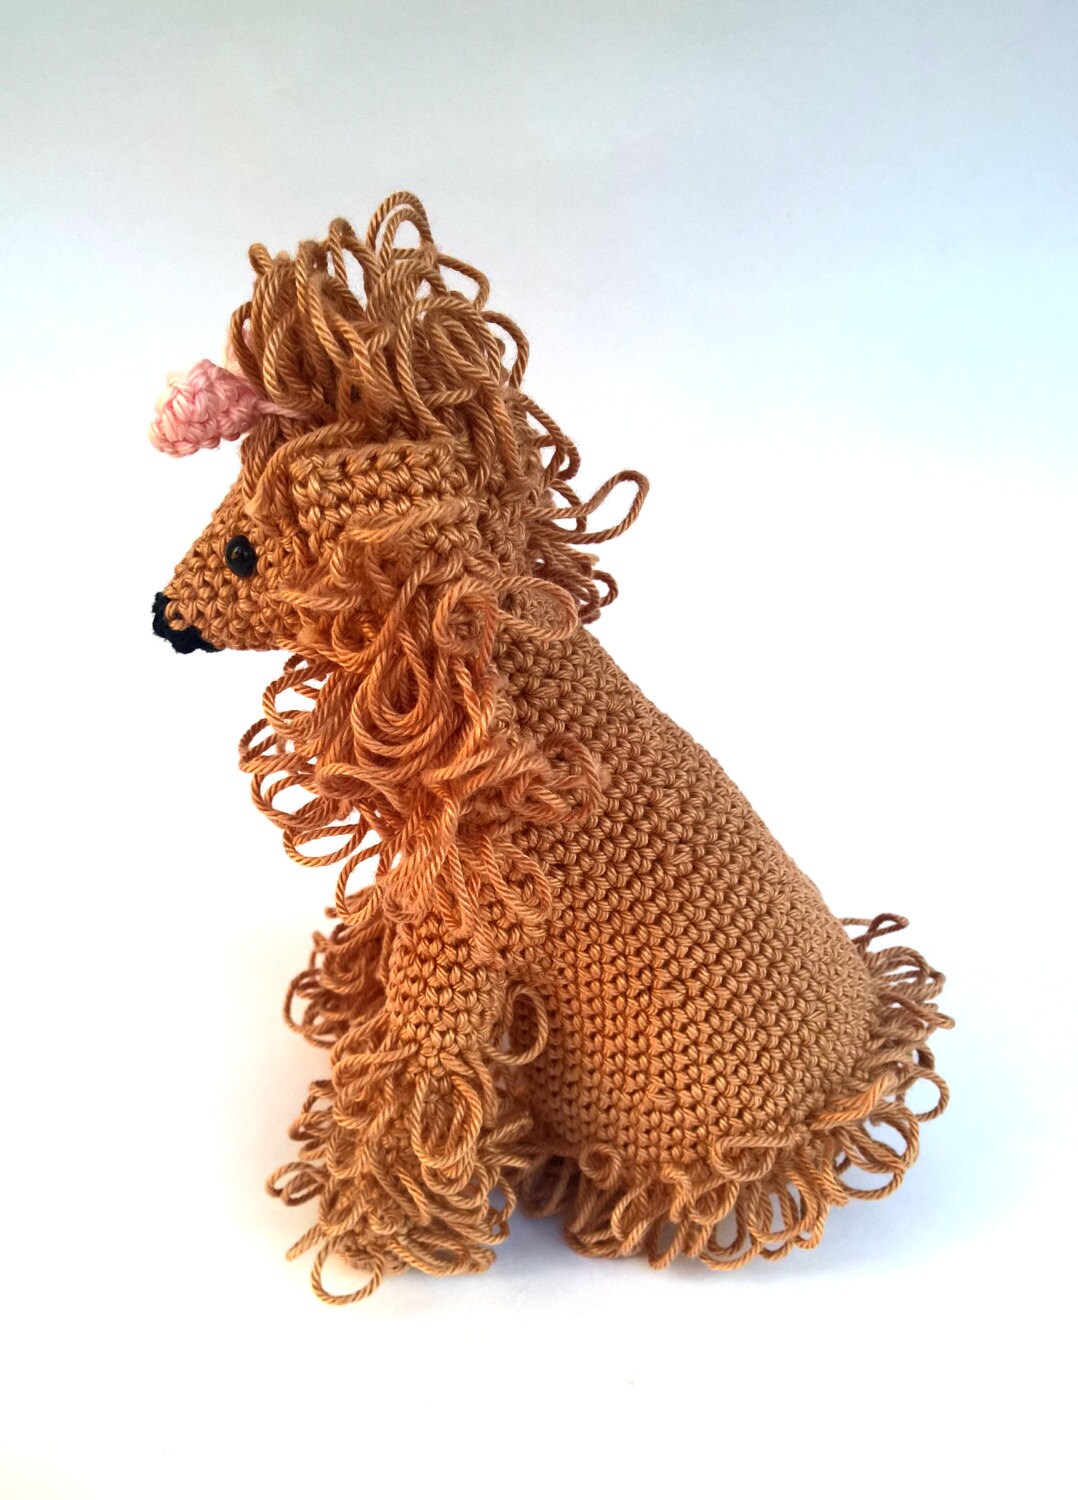 Crochet poodle stuffed toy